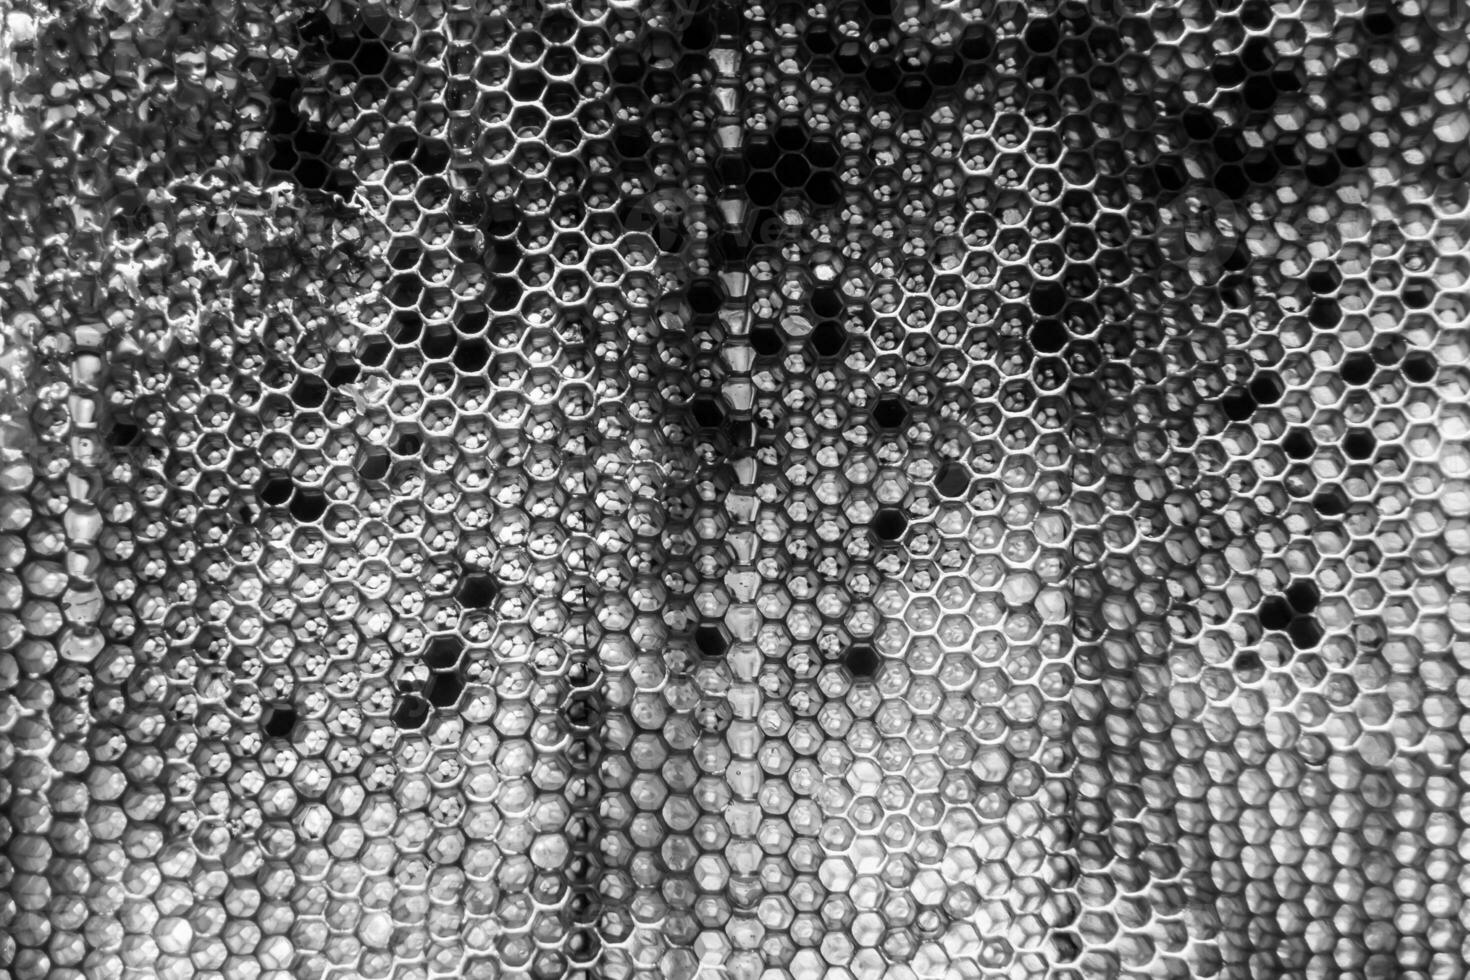 gota de goteo de miel de abeja de panales hexagonales llenos de néctar dorado foto